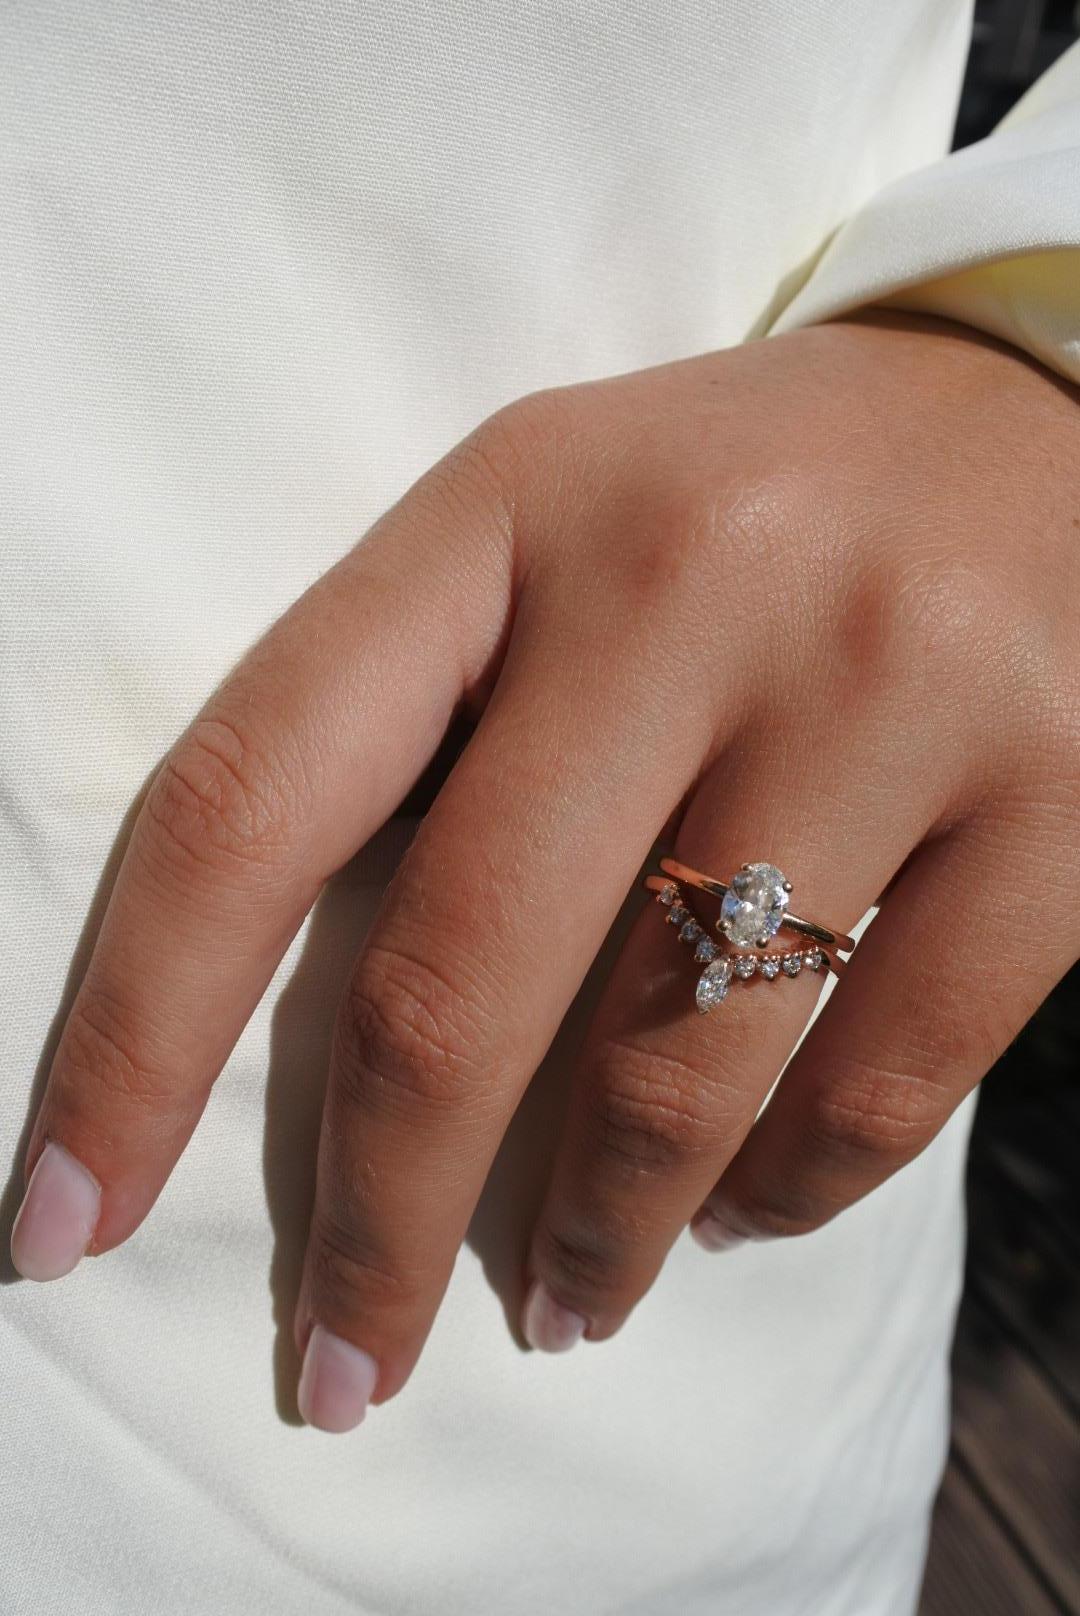 For Sale:  0.74 Carat Oval Cut Diamond Engagement Ring in 14k Rose Gold, Shlomit Rogel 5